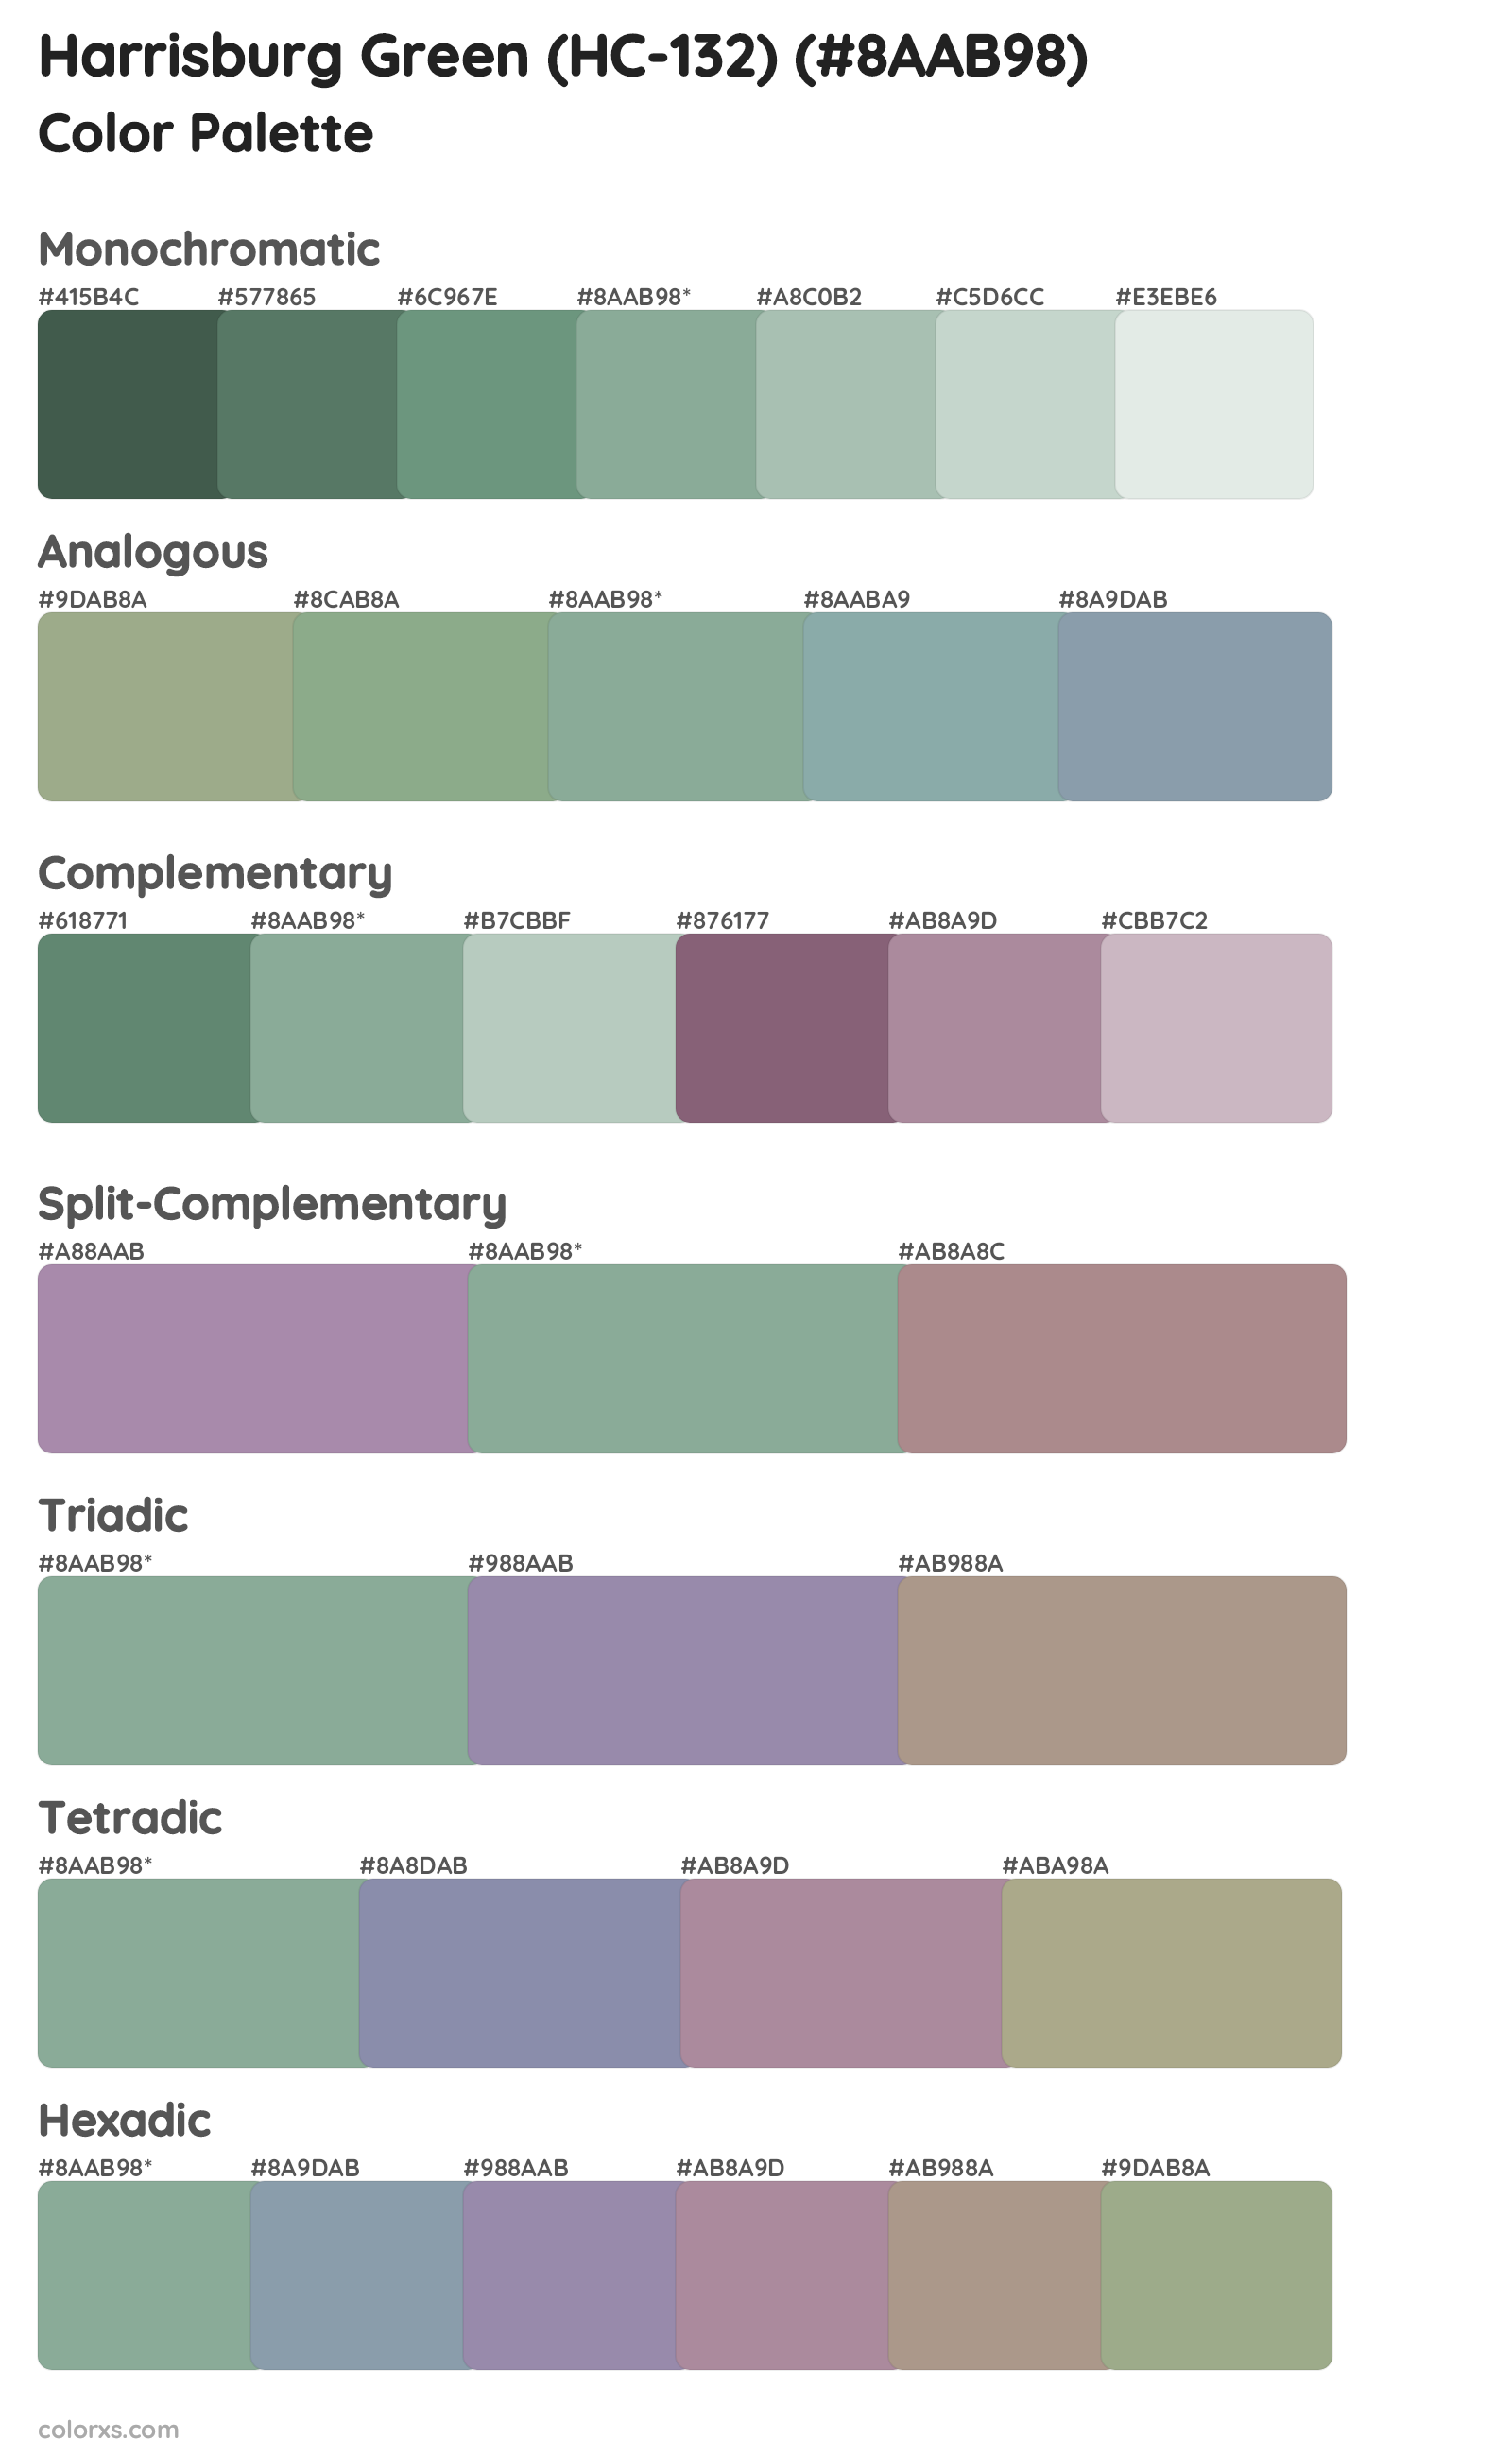 Harrisburg Green (HC-132) Color Scheme Palettes